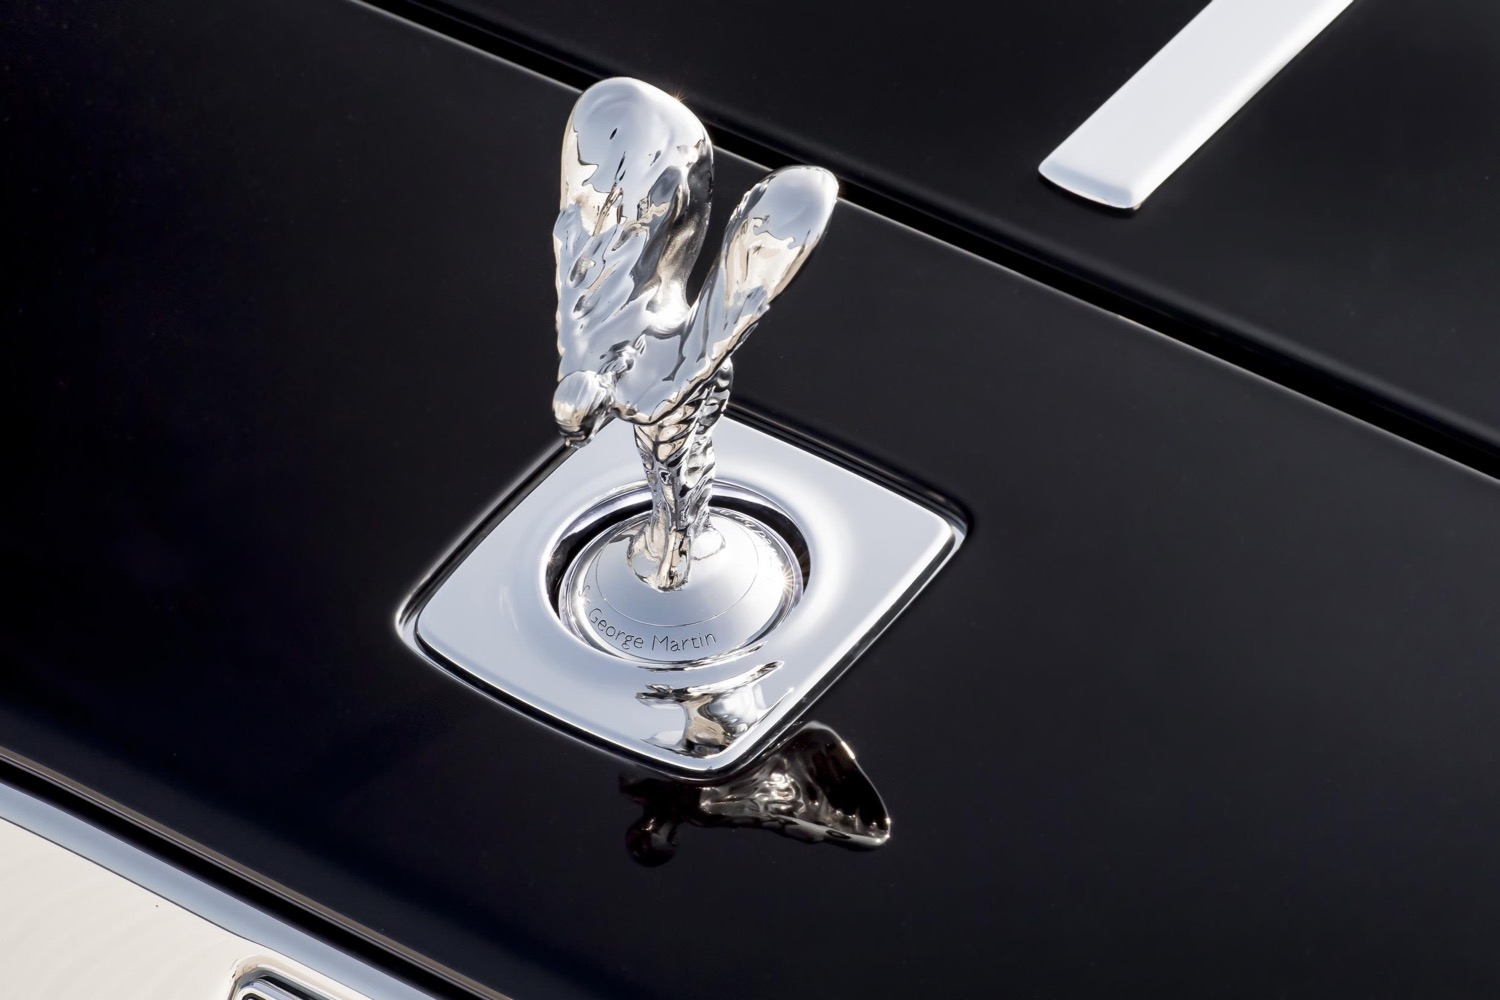 Rolls-Royce Wraith "Inspired by British Music" (George Martin)